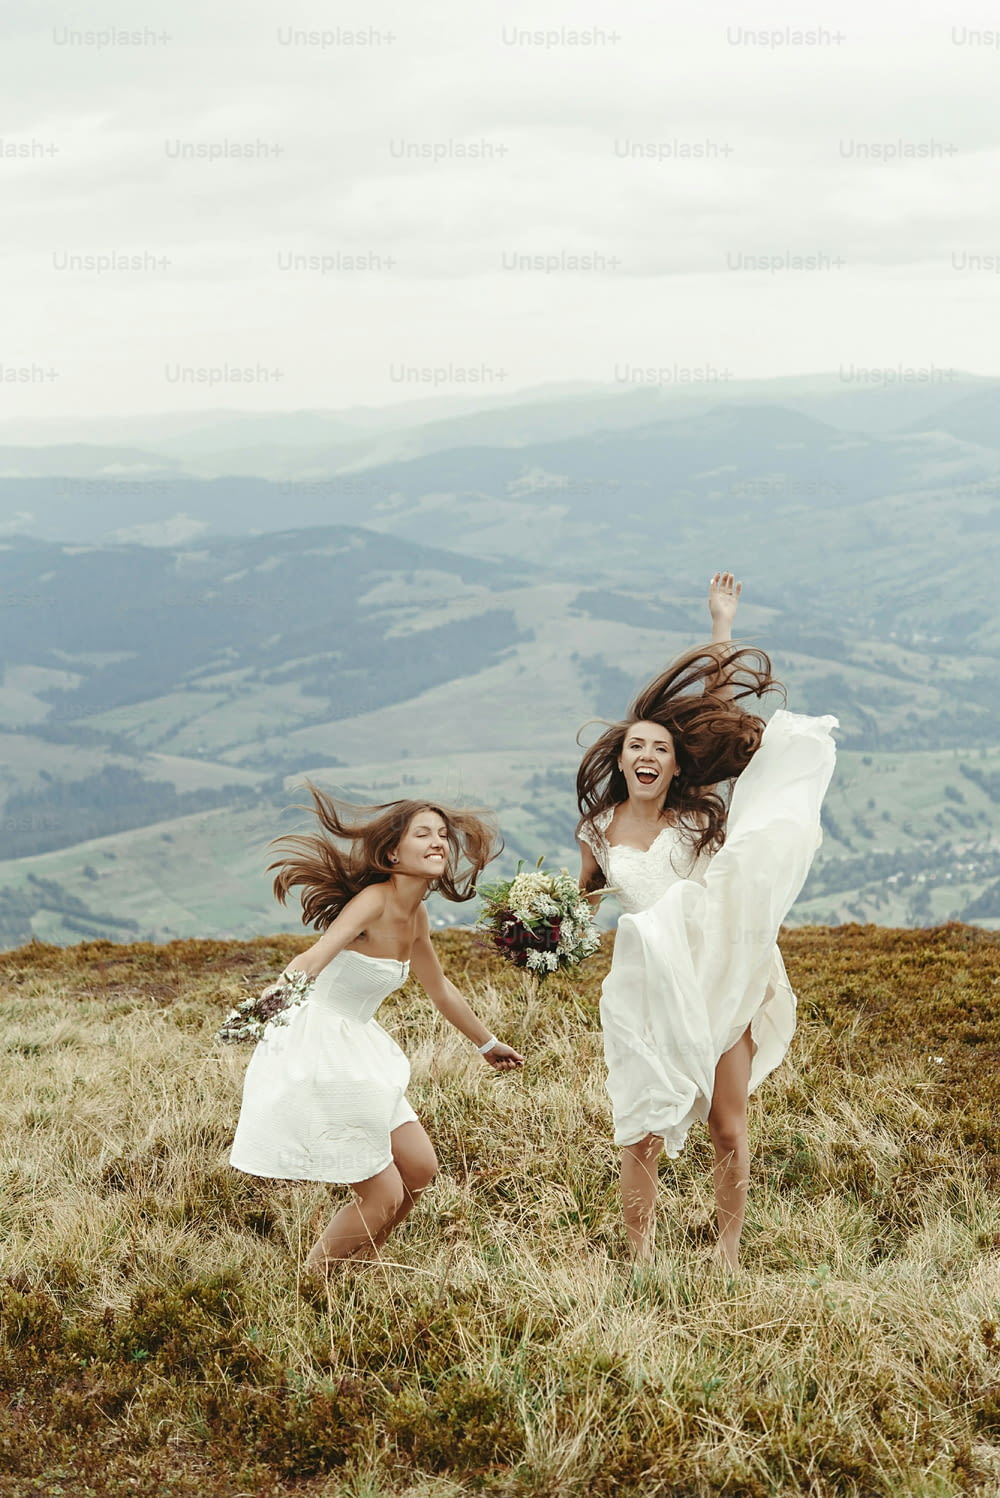 stylish bridesmaid and gorgeous bride having fun and jumping, boho wedding, luxury ceremony at mountains